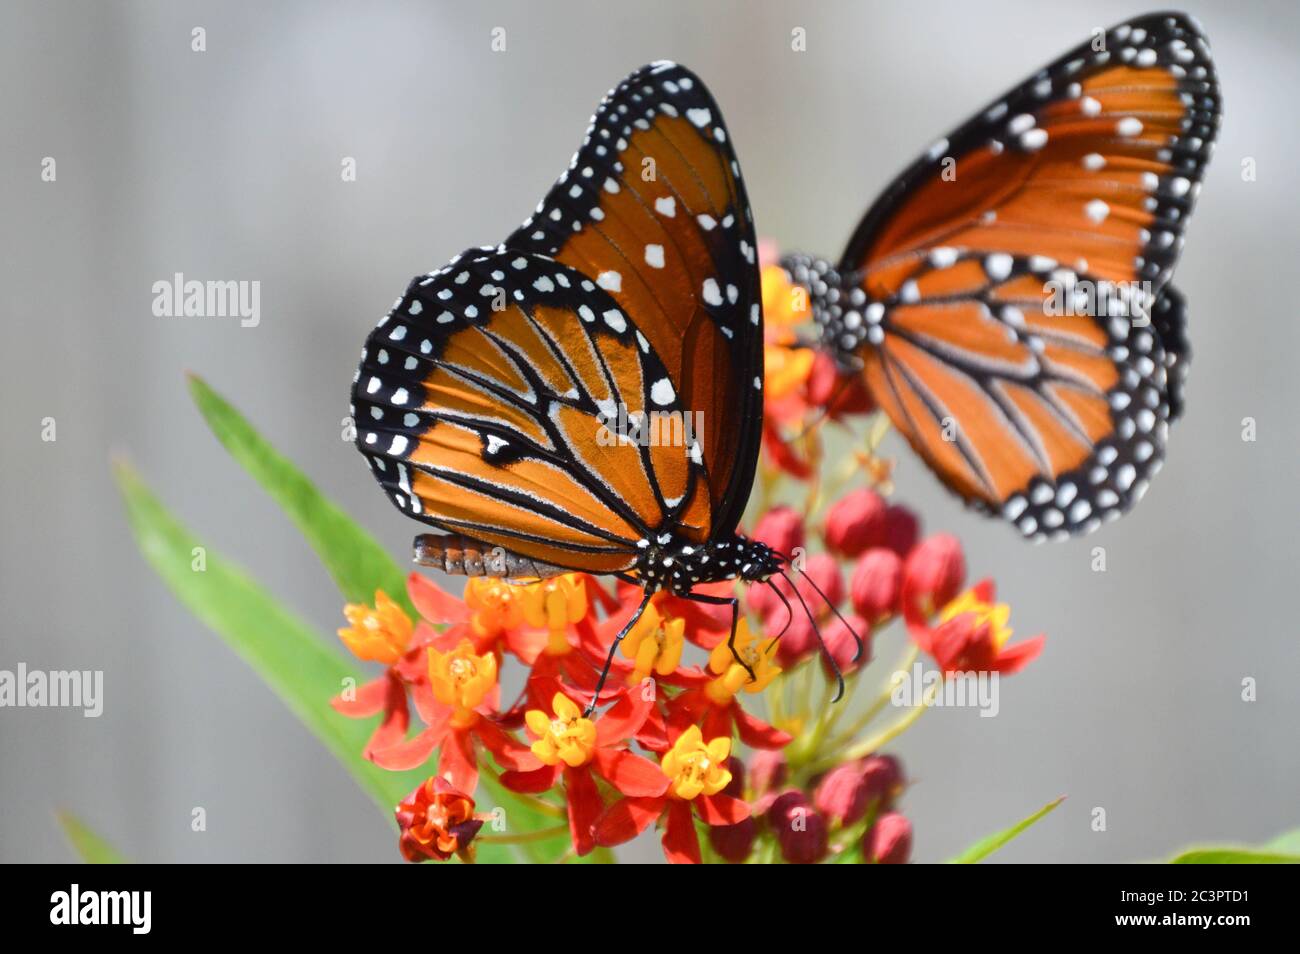 Queen farfalla nectaring su fiori tropicali di mungitura Foto Stock